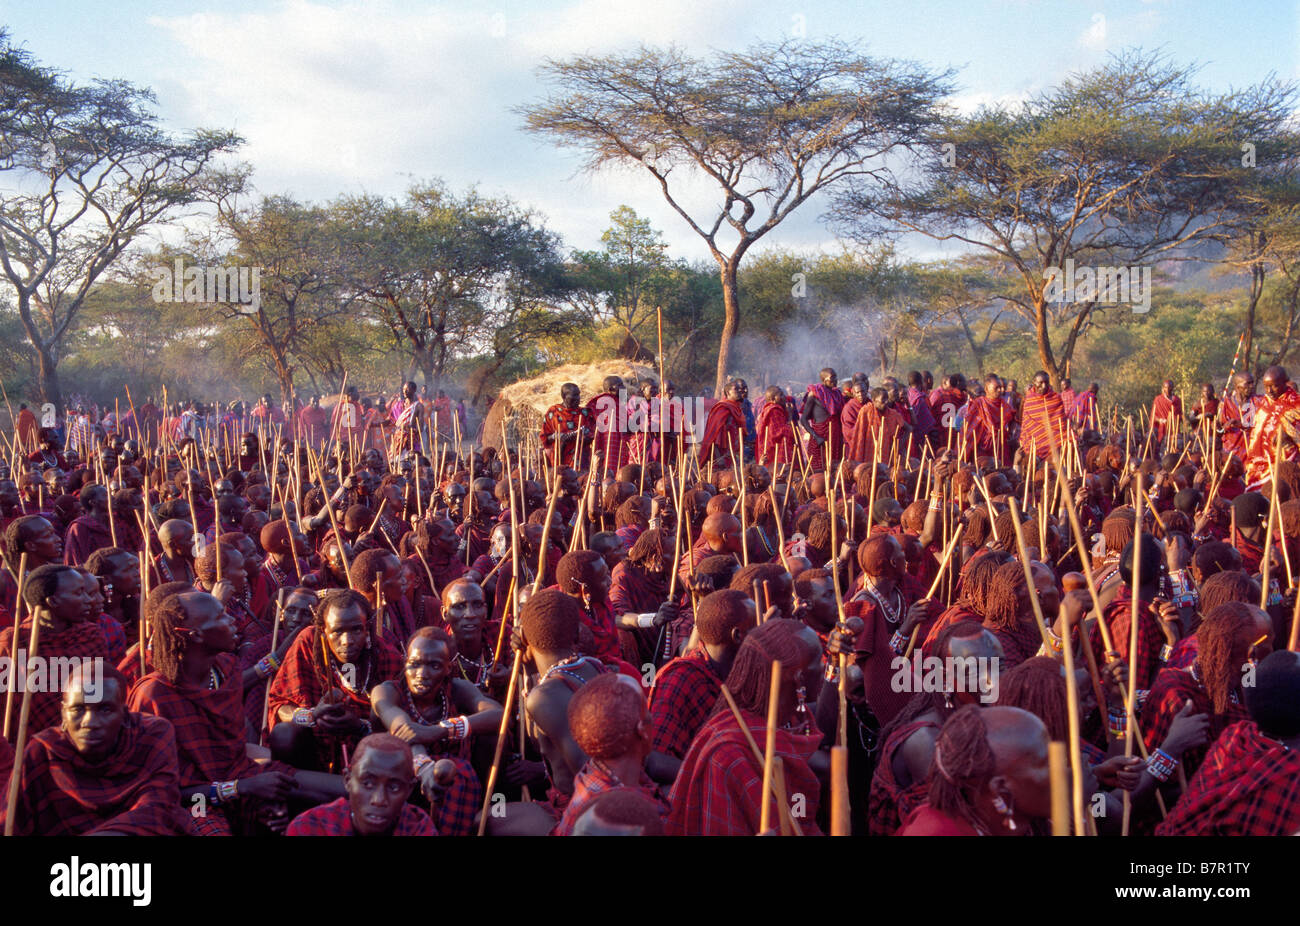 Africa, Kenya, Kajiado District, Ol doinyo Orok. A large gathering of Maasai warriors during an Eunoto ceremony Stock Photo